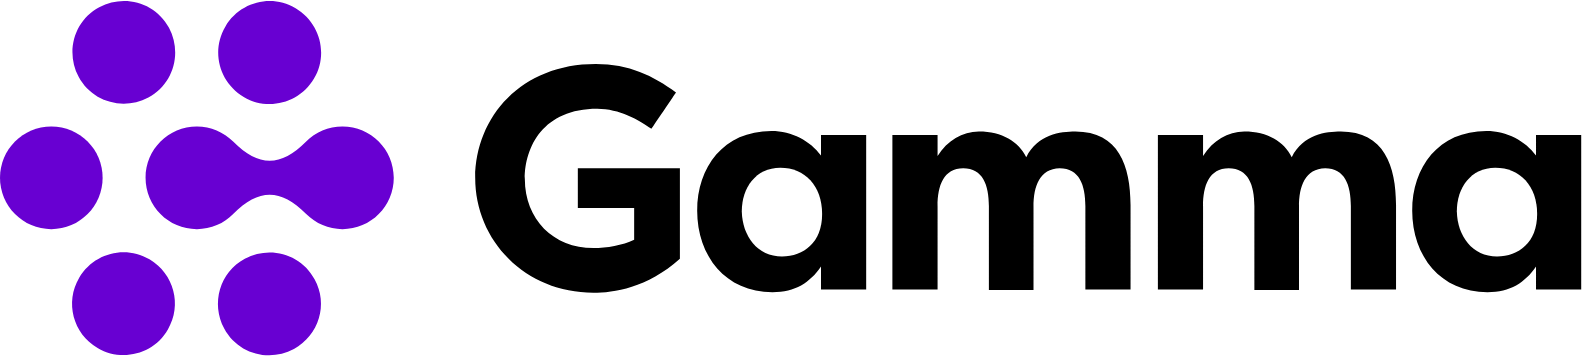 Gamma Communications logo large (transparent PNG)